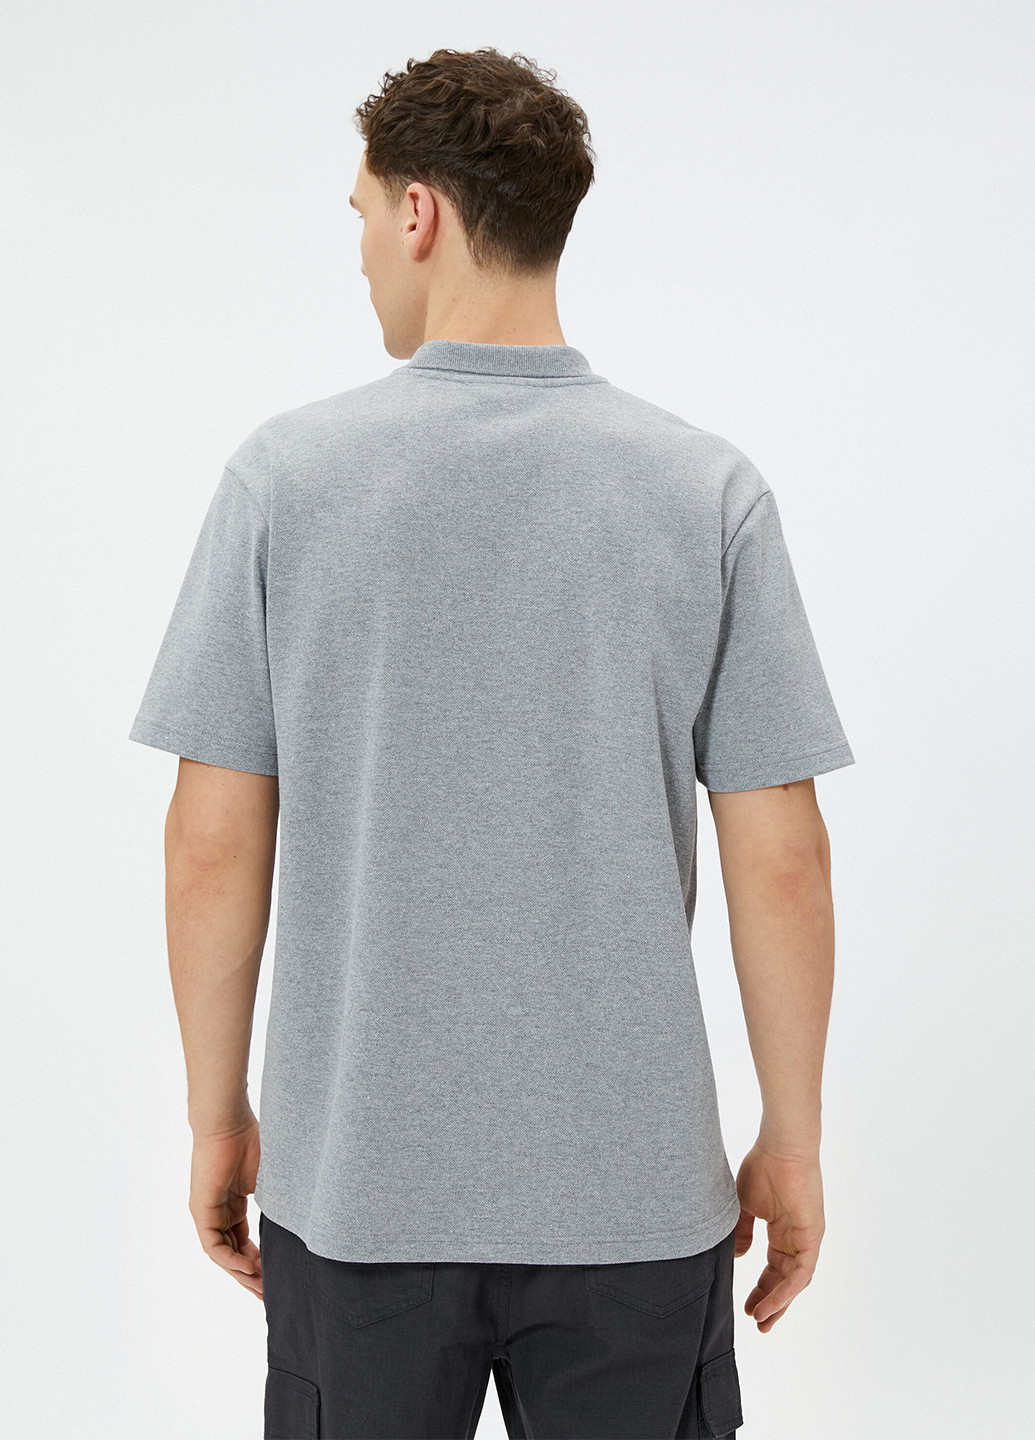 Серая футболка-поло для мужчин KOTON меланжевая